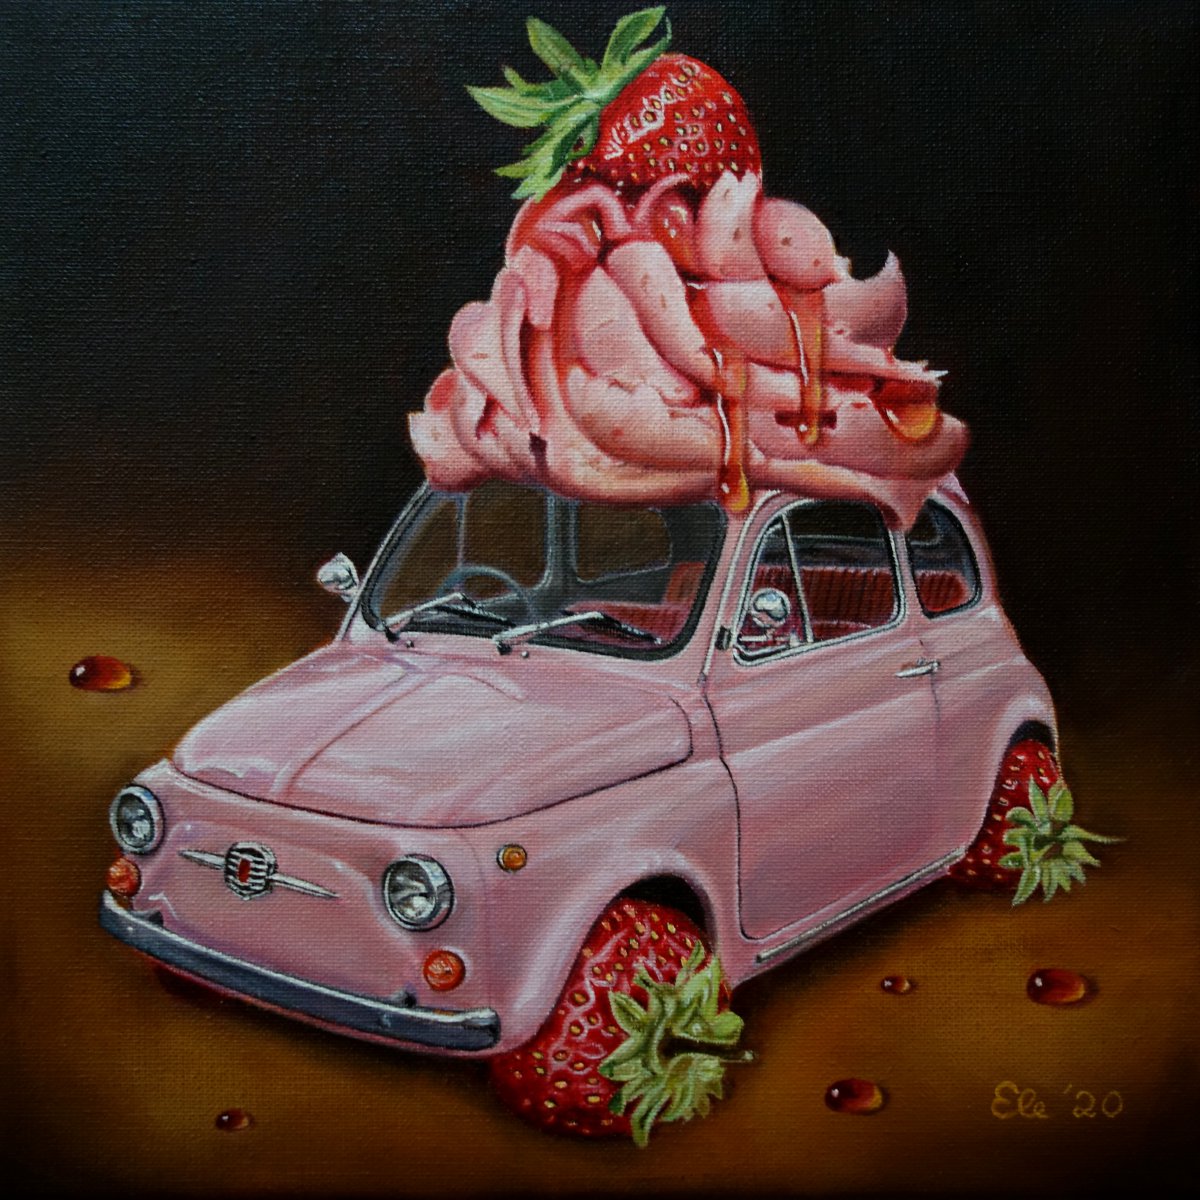 Fiat 500 - Strawberry cream - Gabriele Esau